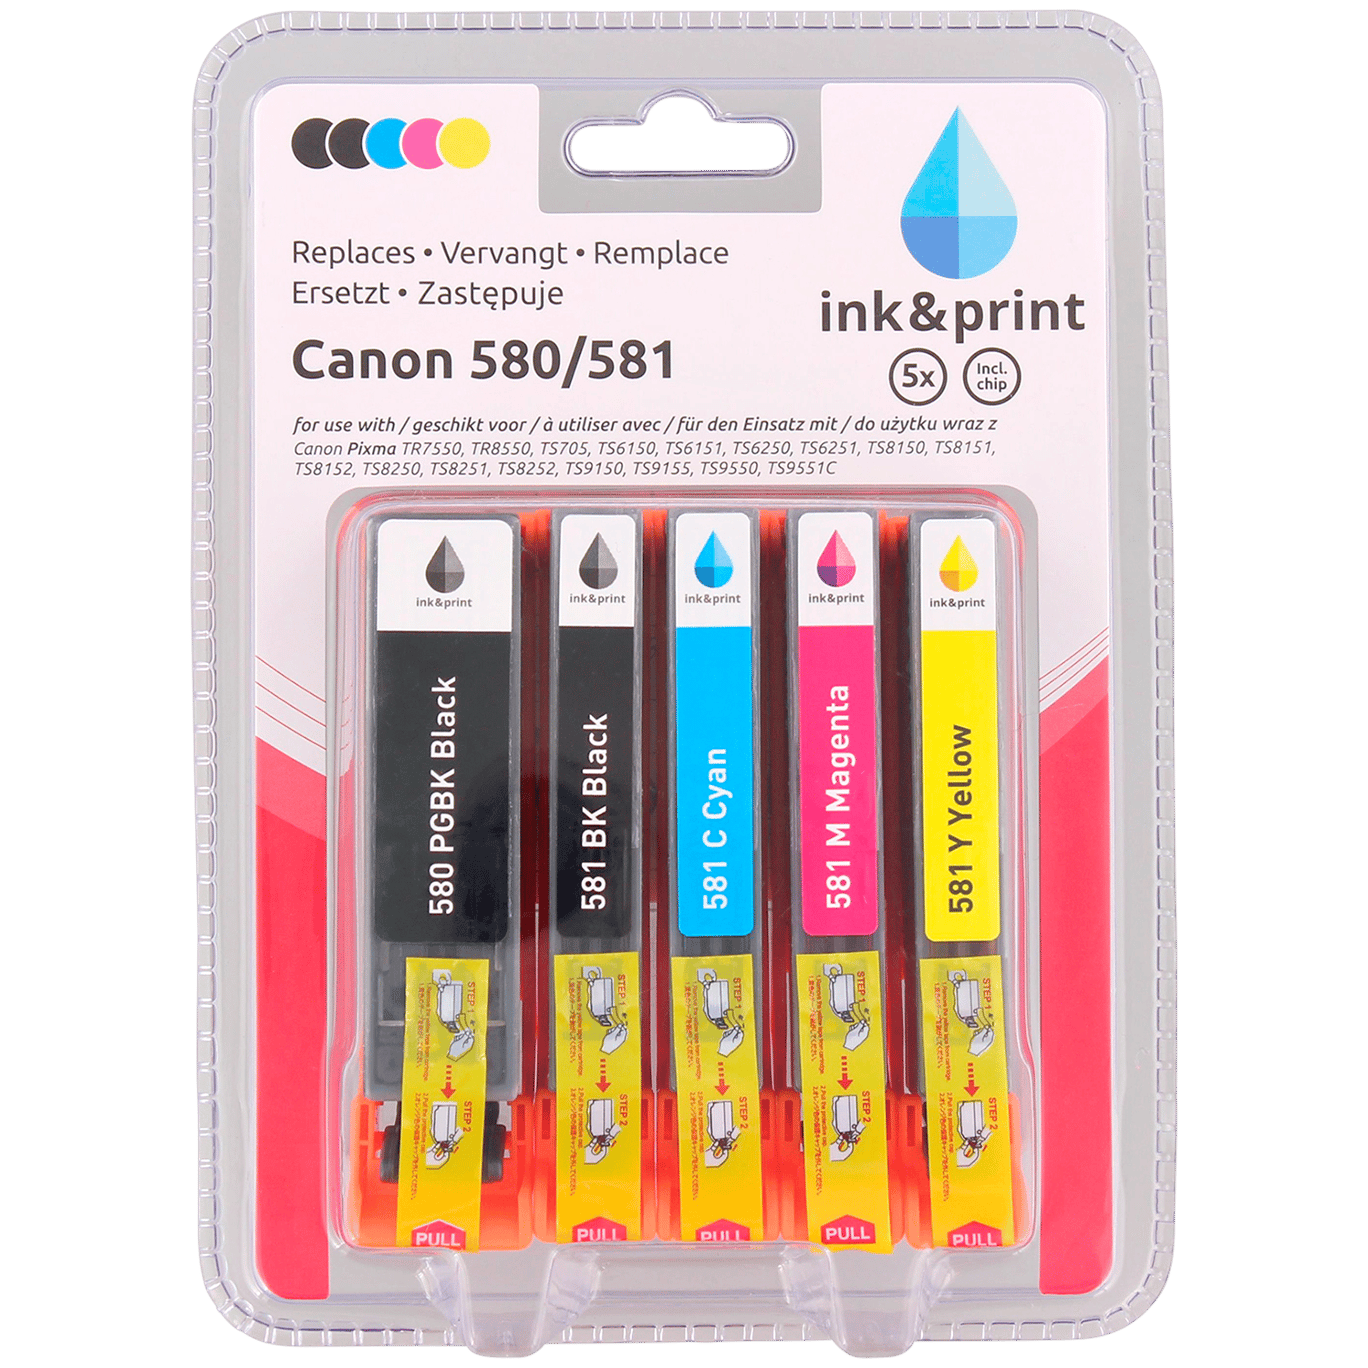 Reizen lunch streng Ink & Print inktcartridges | Action.com